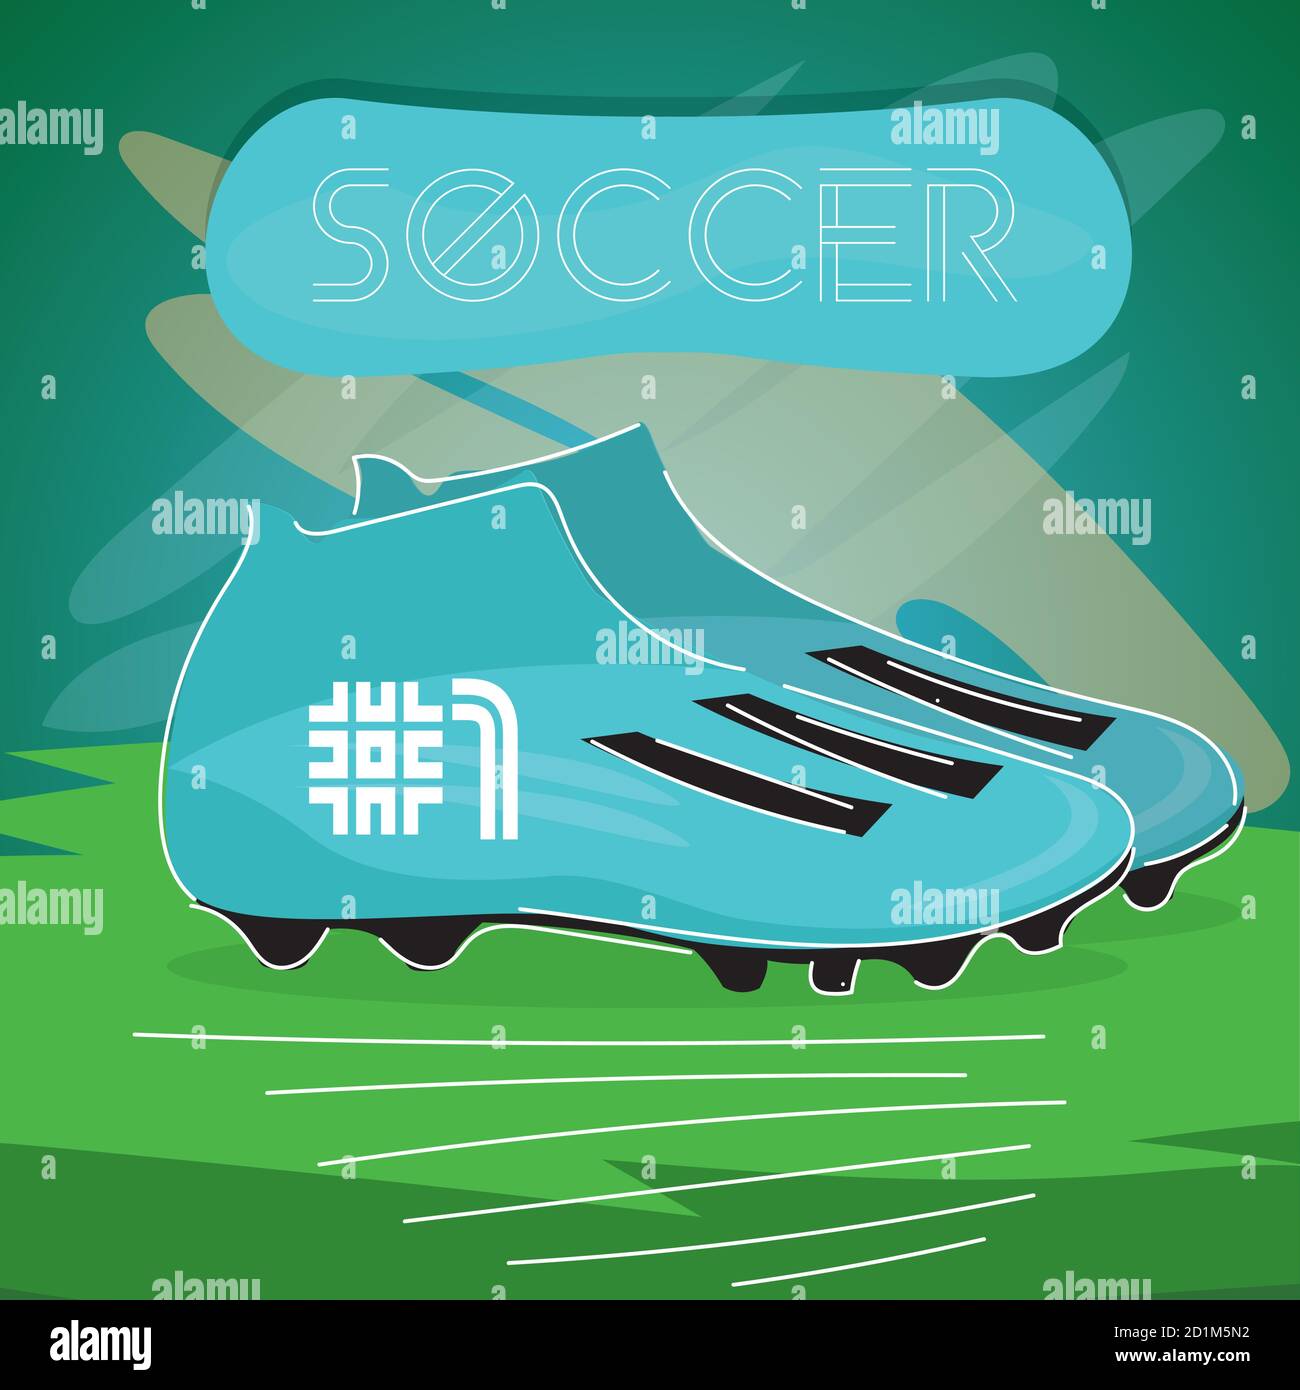 Premium Vector  Vector line drawing sketch soccer or football shoe vector  illustrations